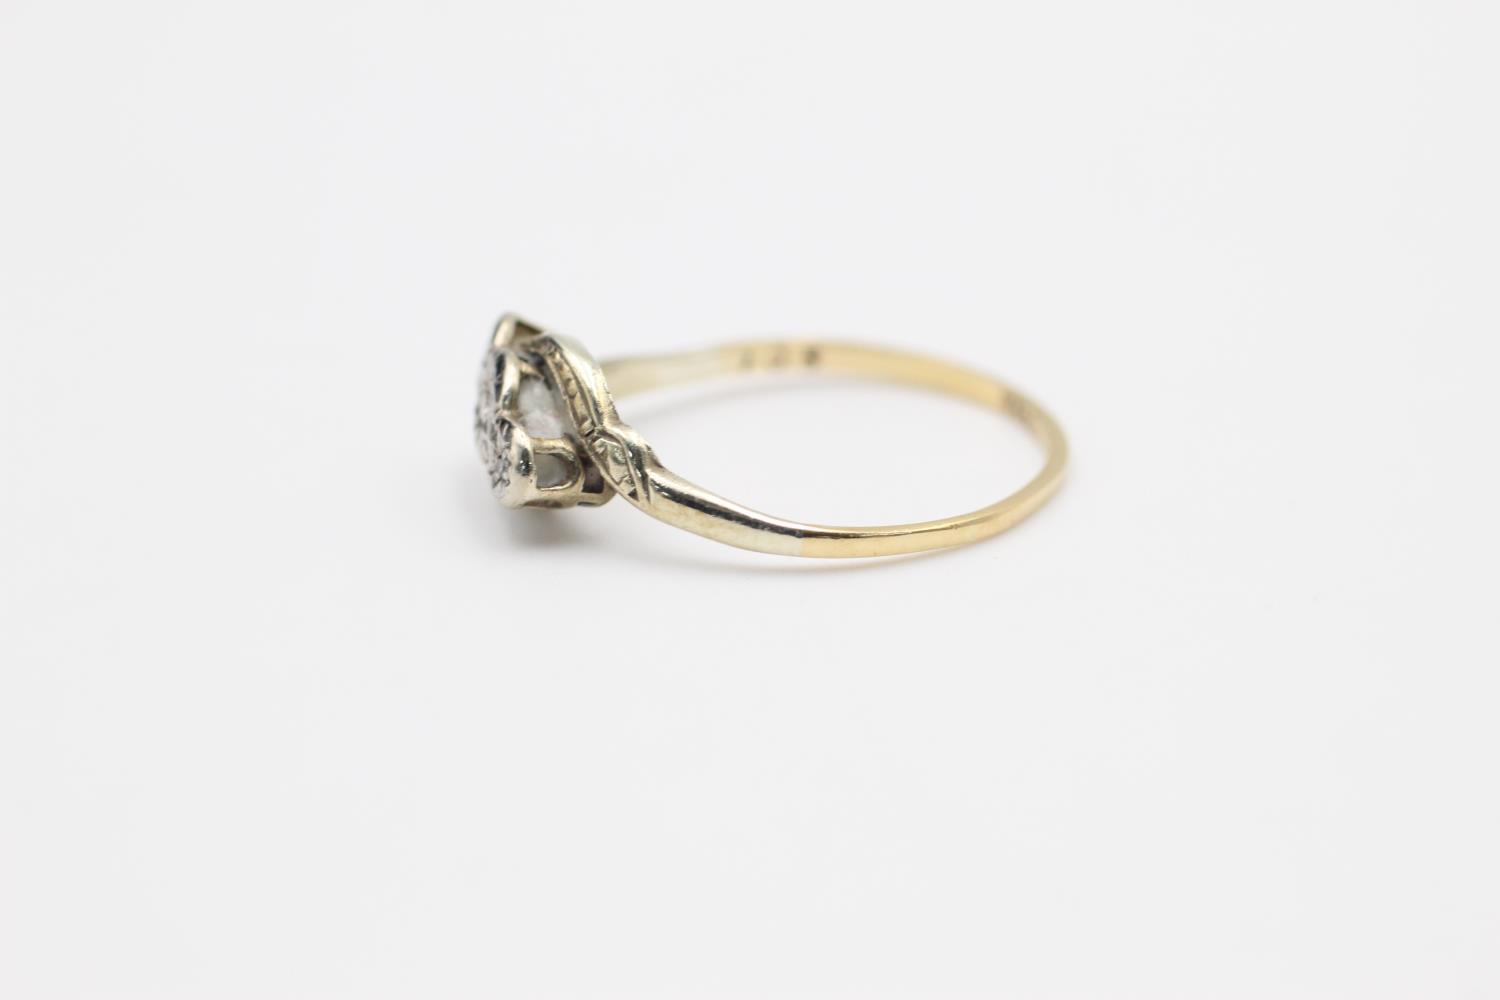 18ct gold diamond twist ring 1.9 grams gross - Image 2 of 6